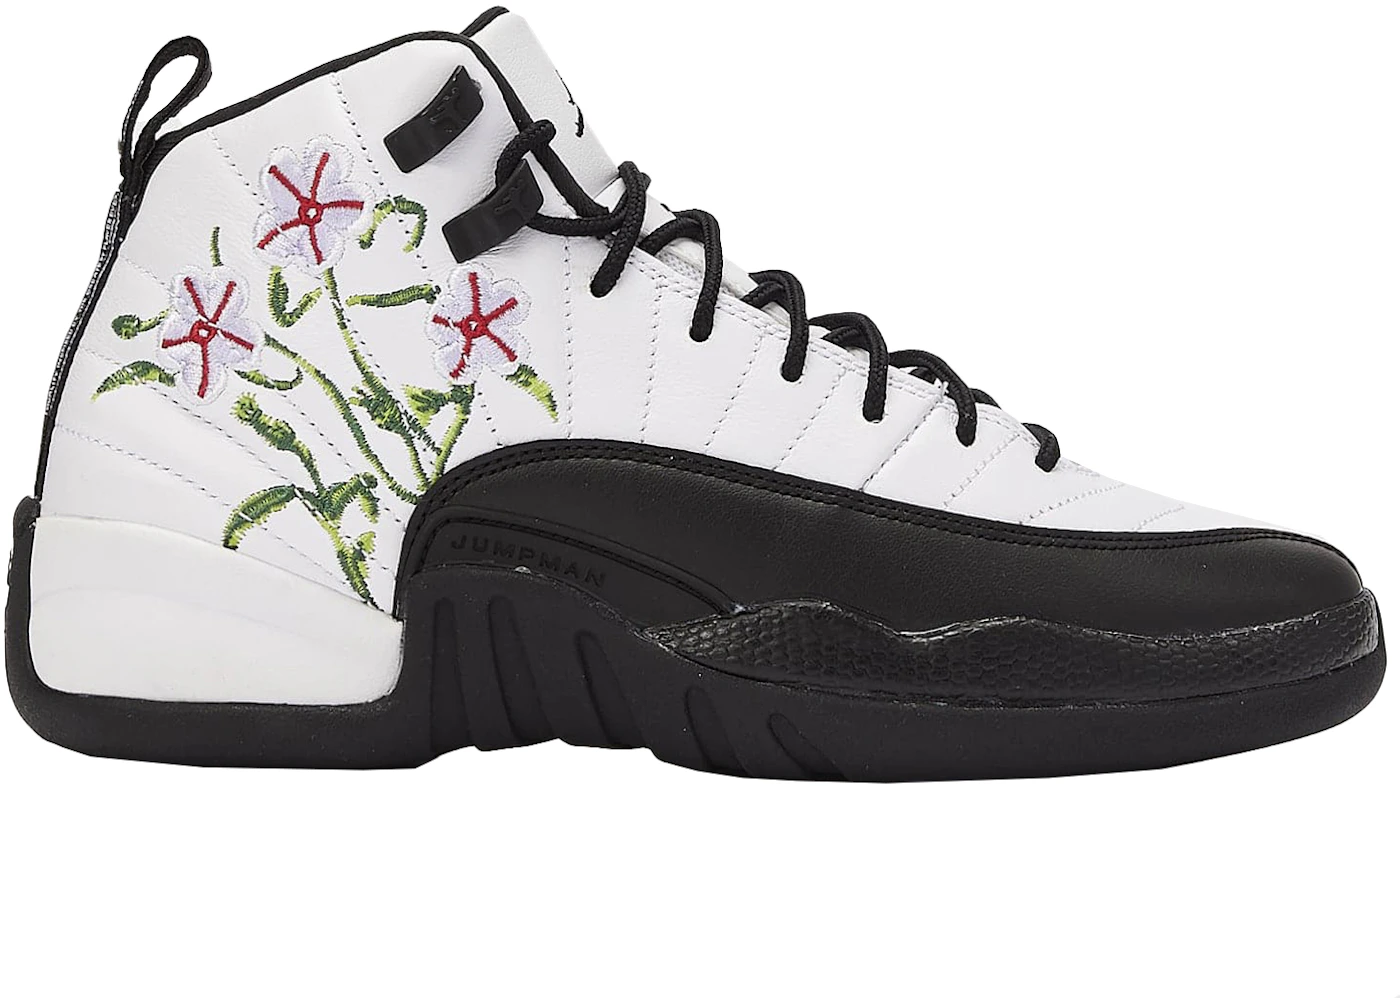 Gucci Flower Air Jordan 13 Sneakers Shoes Hot 2022 For Men Women